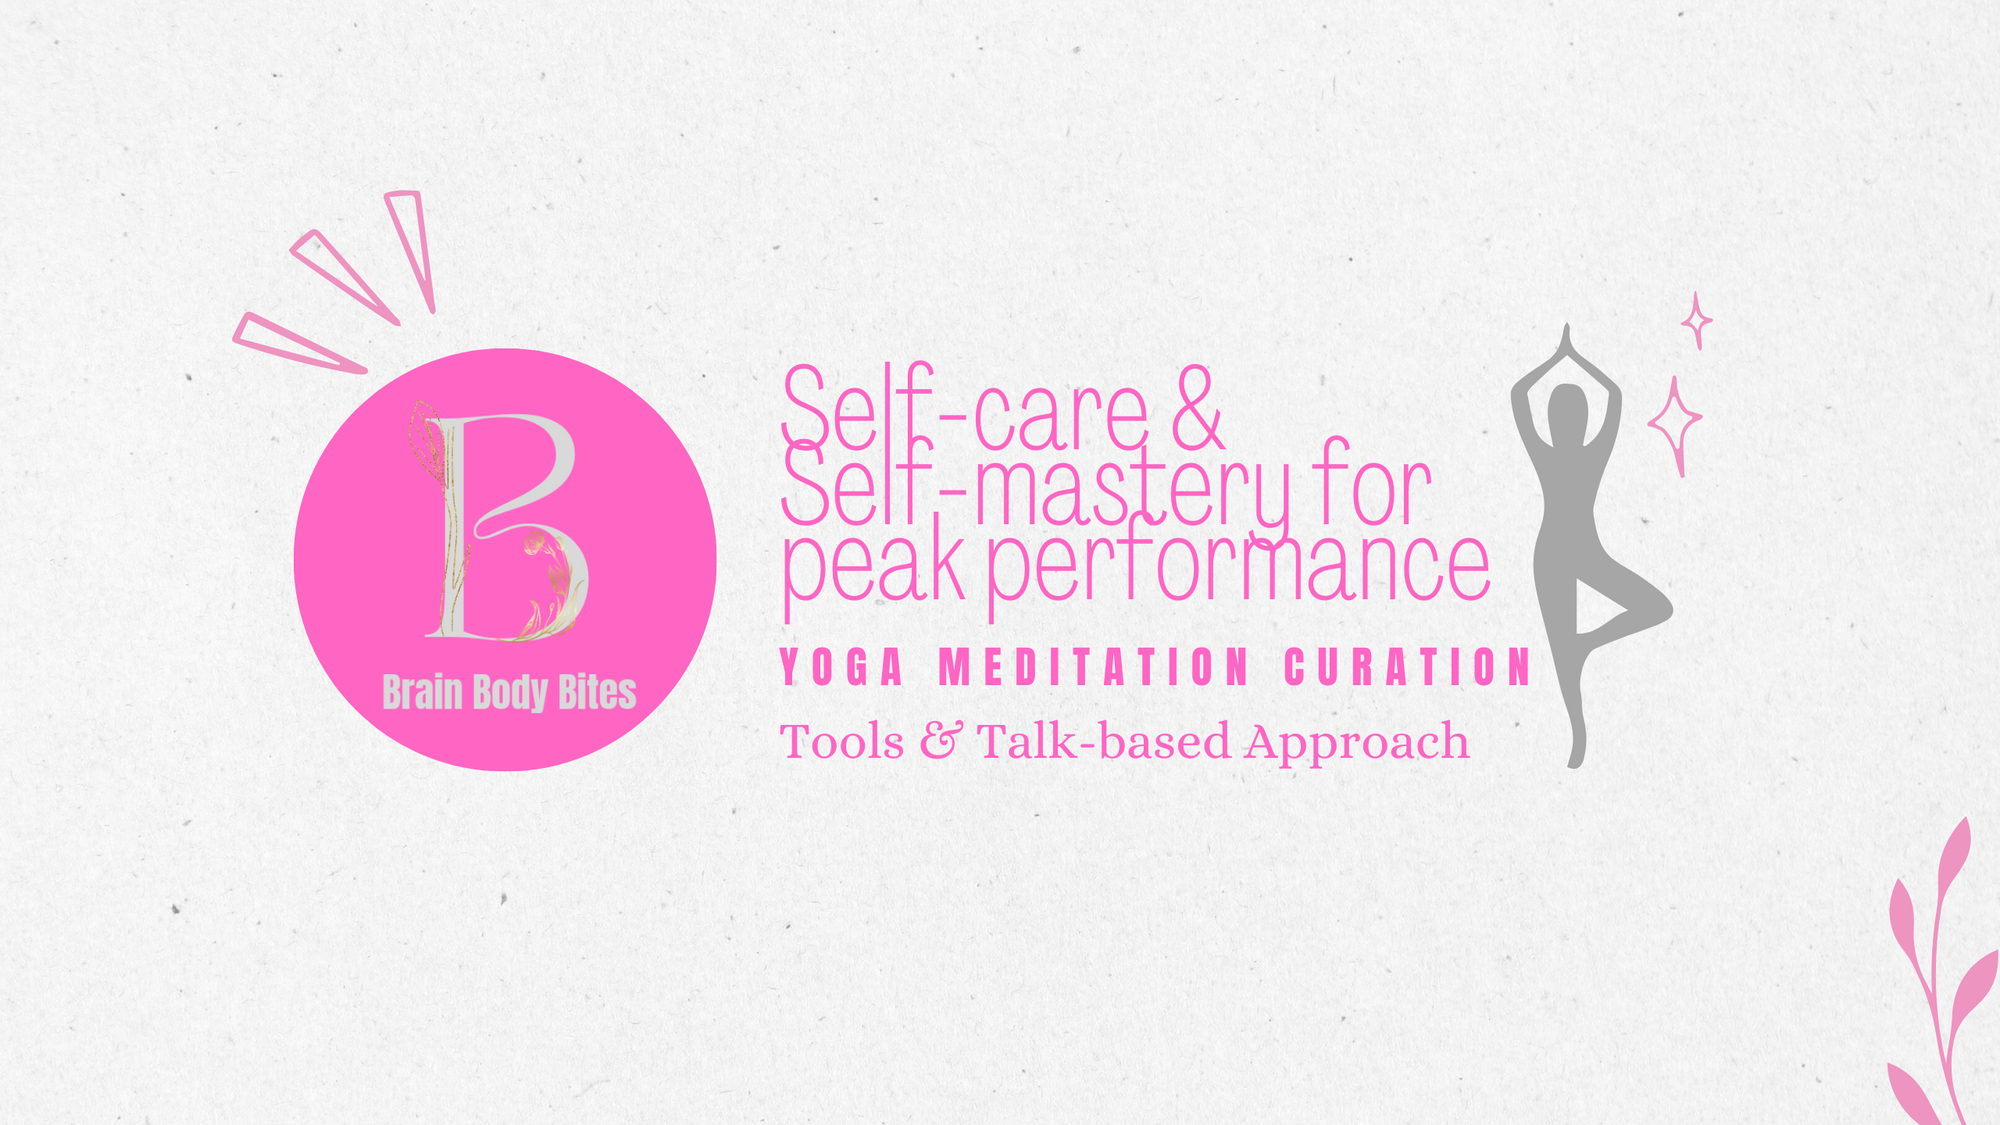 #brain #body #yoga #meditation #tools #tips